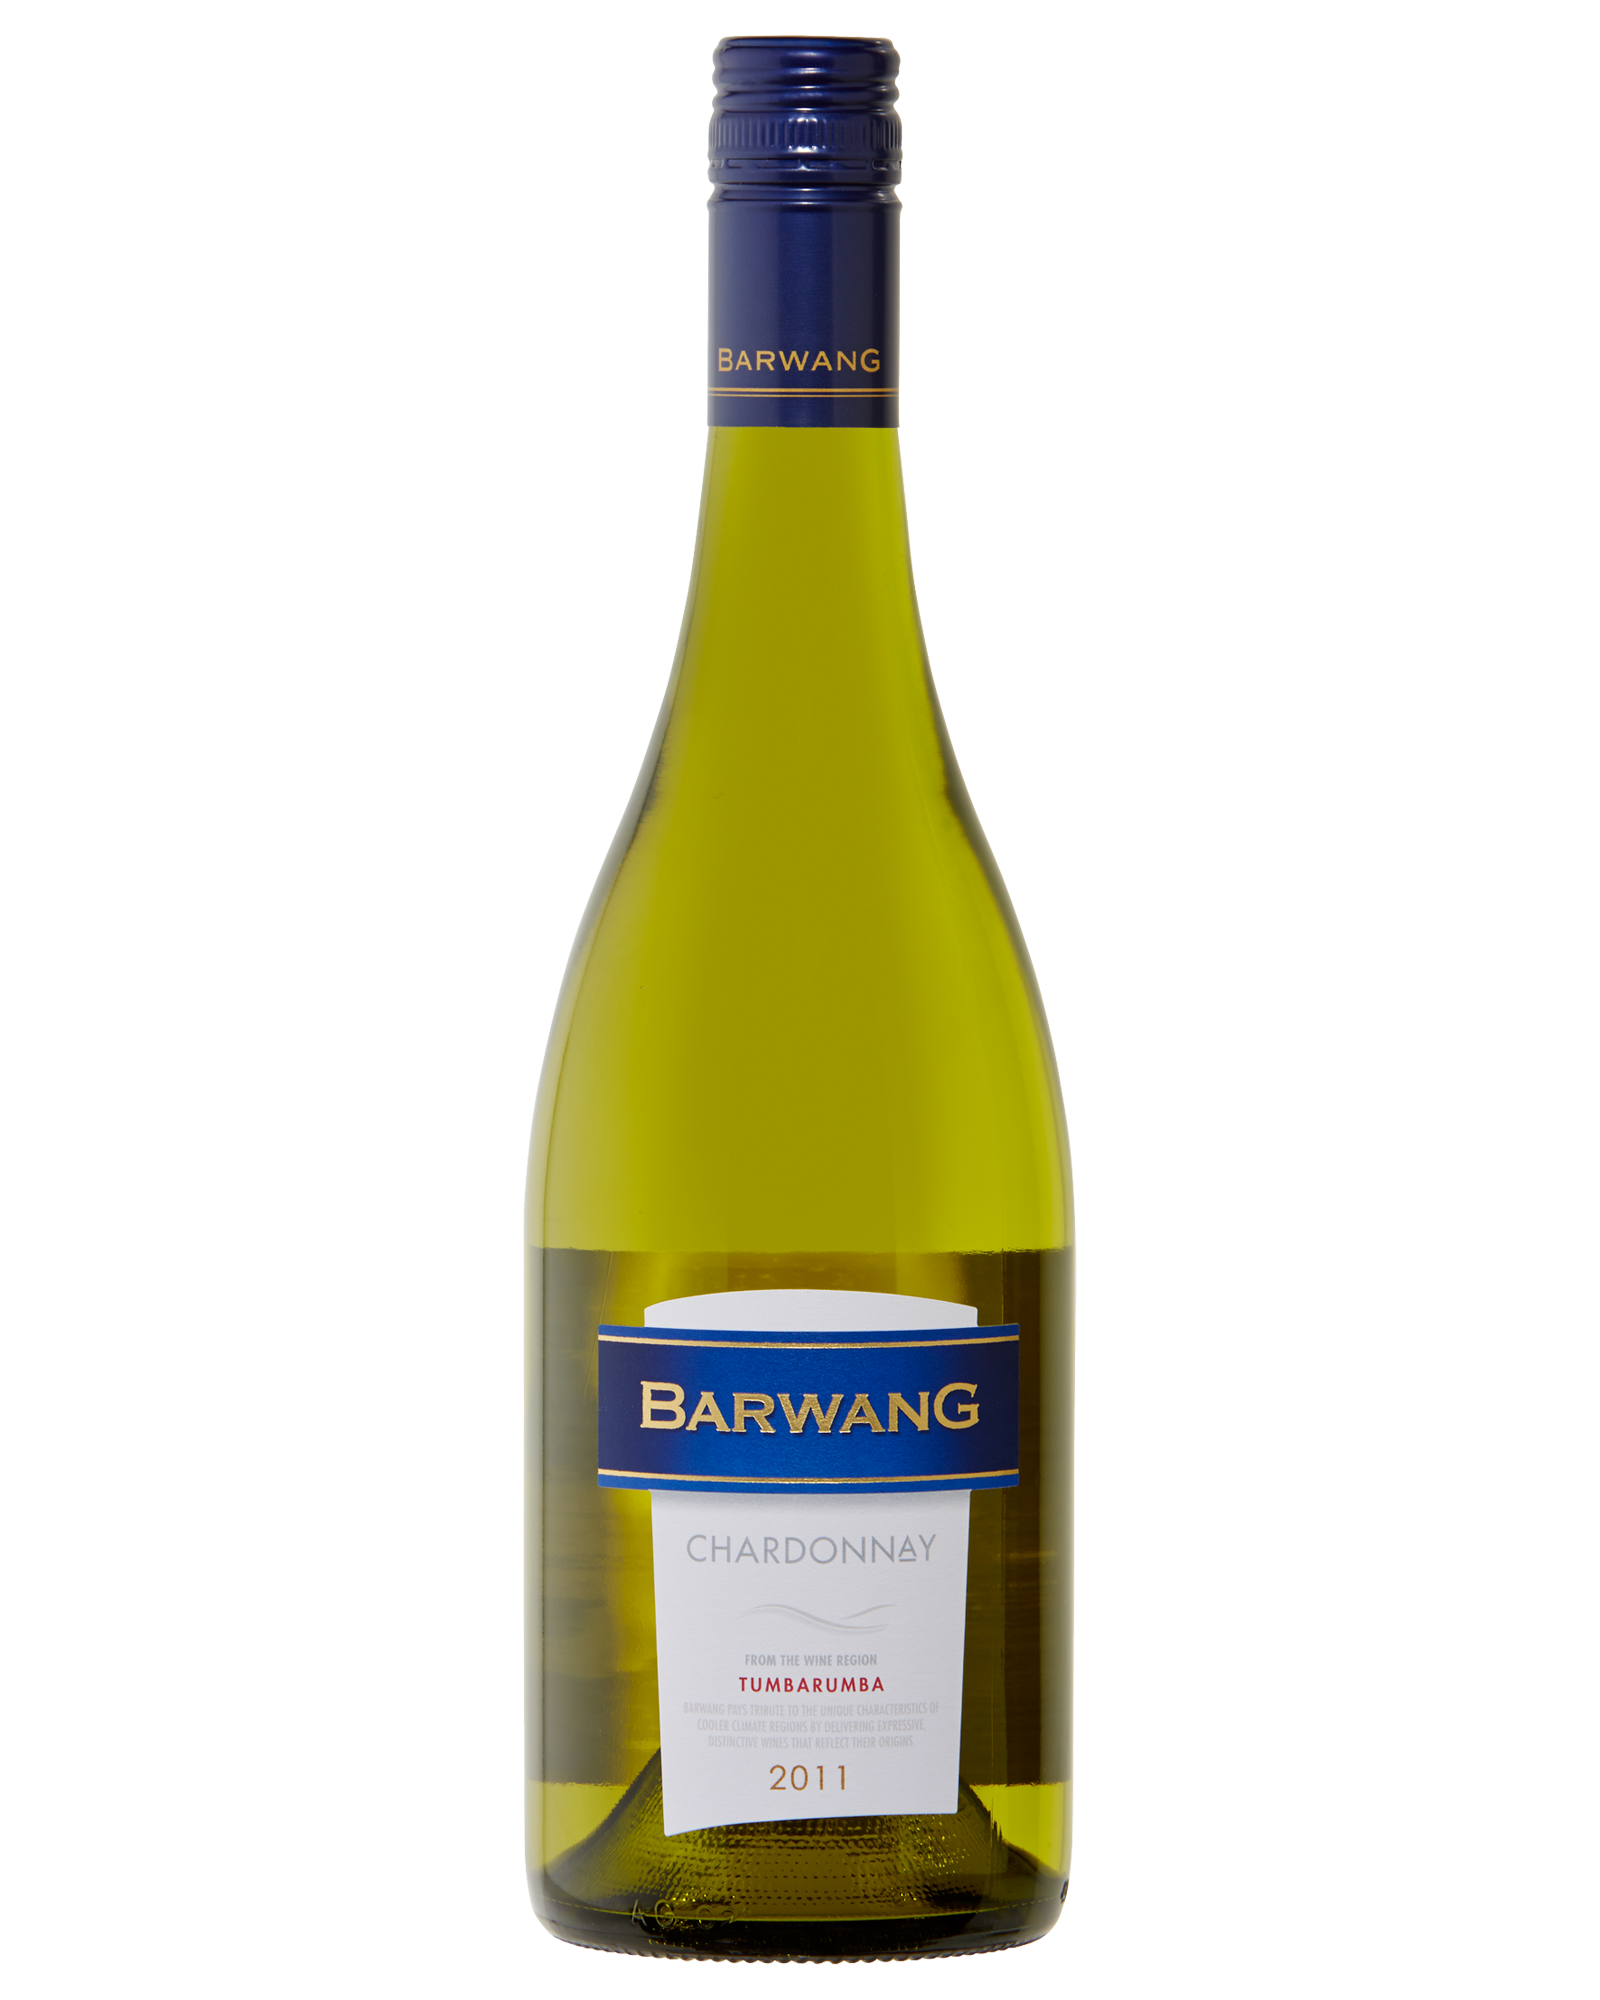 Barwang Chardonnay 2011